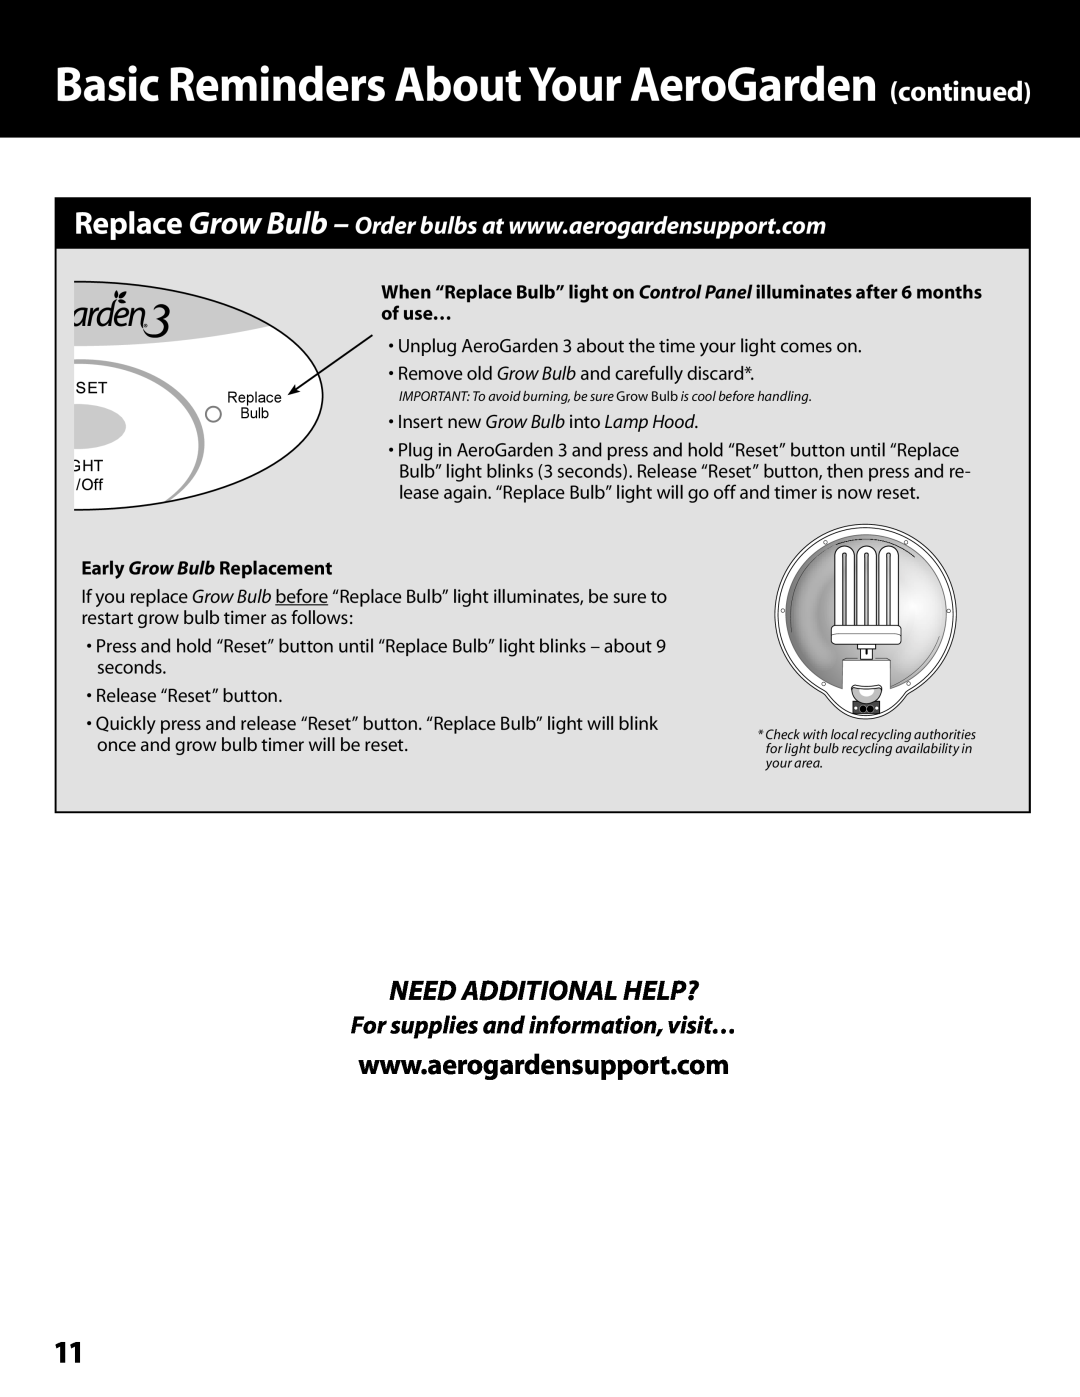 AeroGarden 100302-BSS, 100302-SLR need AddITIonAl HelP?, Insert new Grow Bulb into Lamp Hood, Early Grow Bulb Replacement 